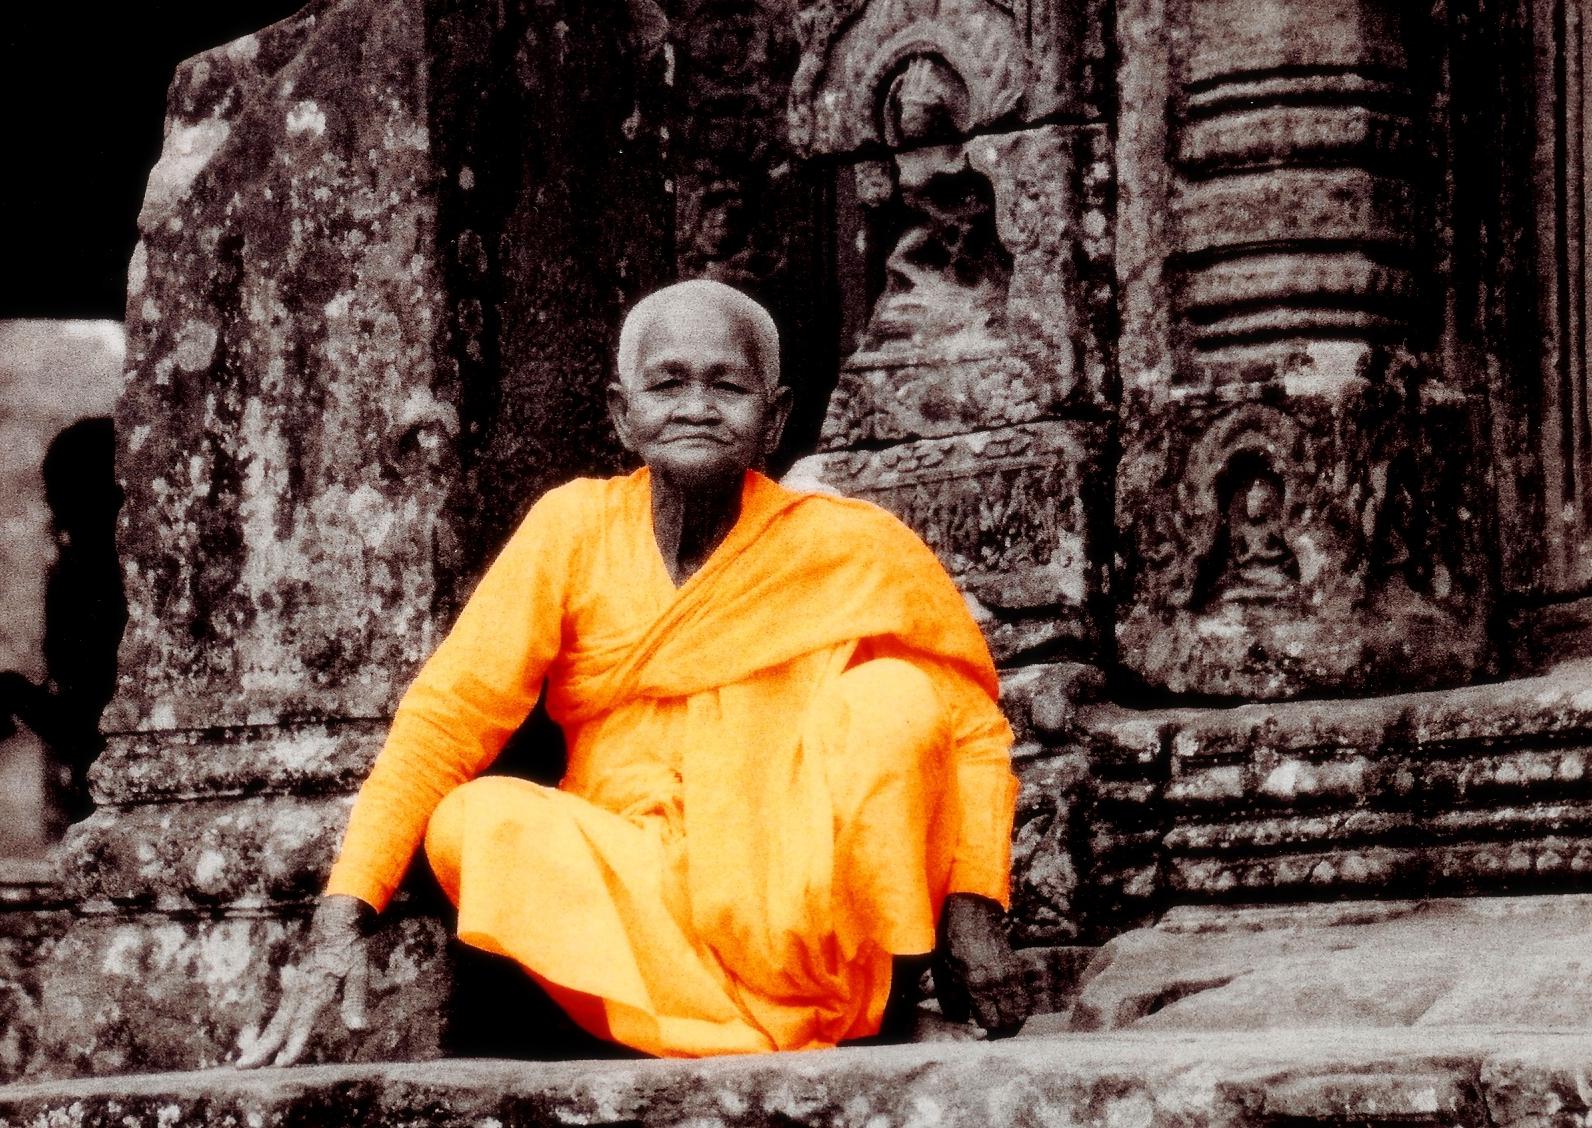 Nicholas Miller Portrait Photograph - Cambodia Monk at Angkor Wat